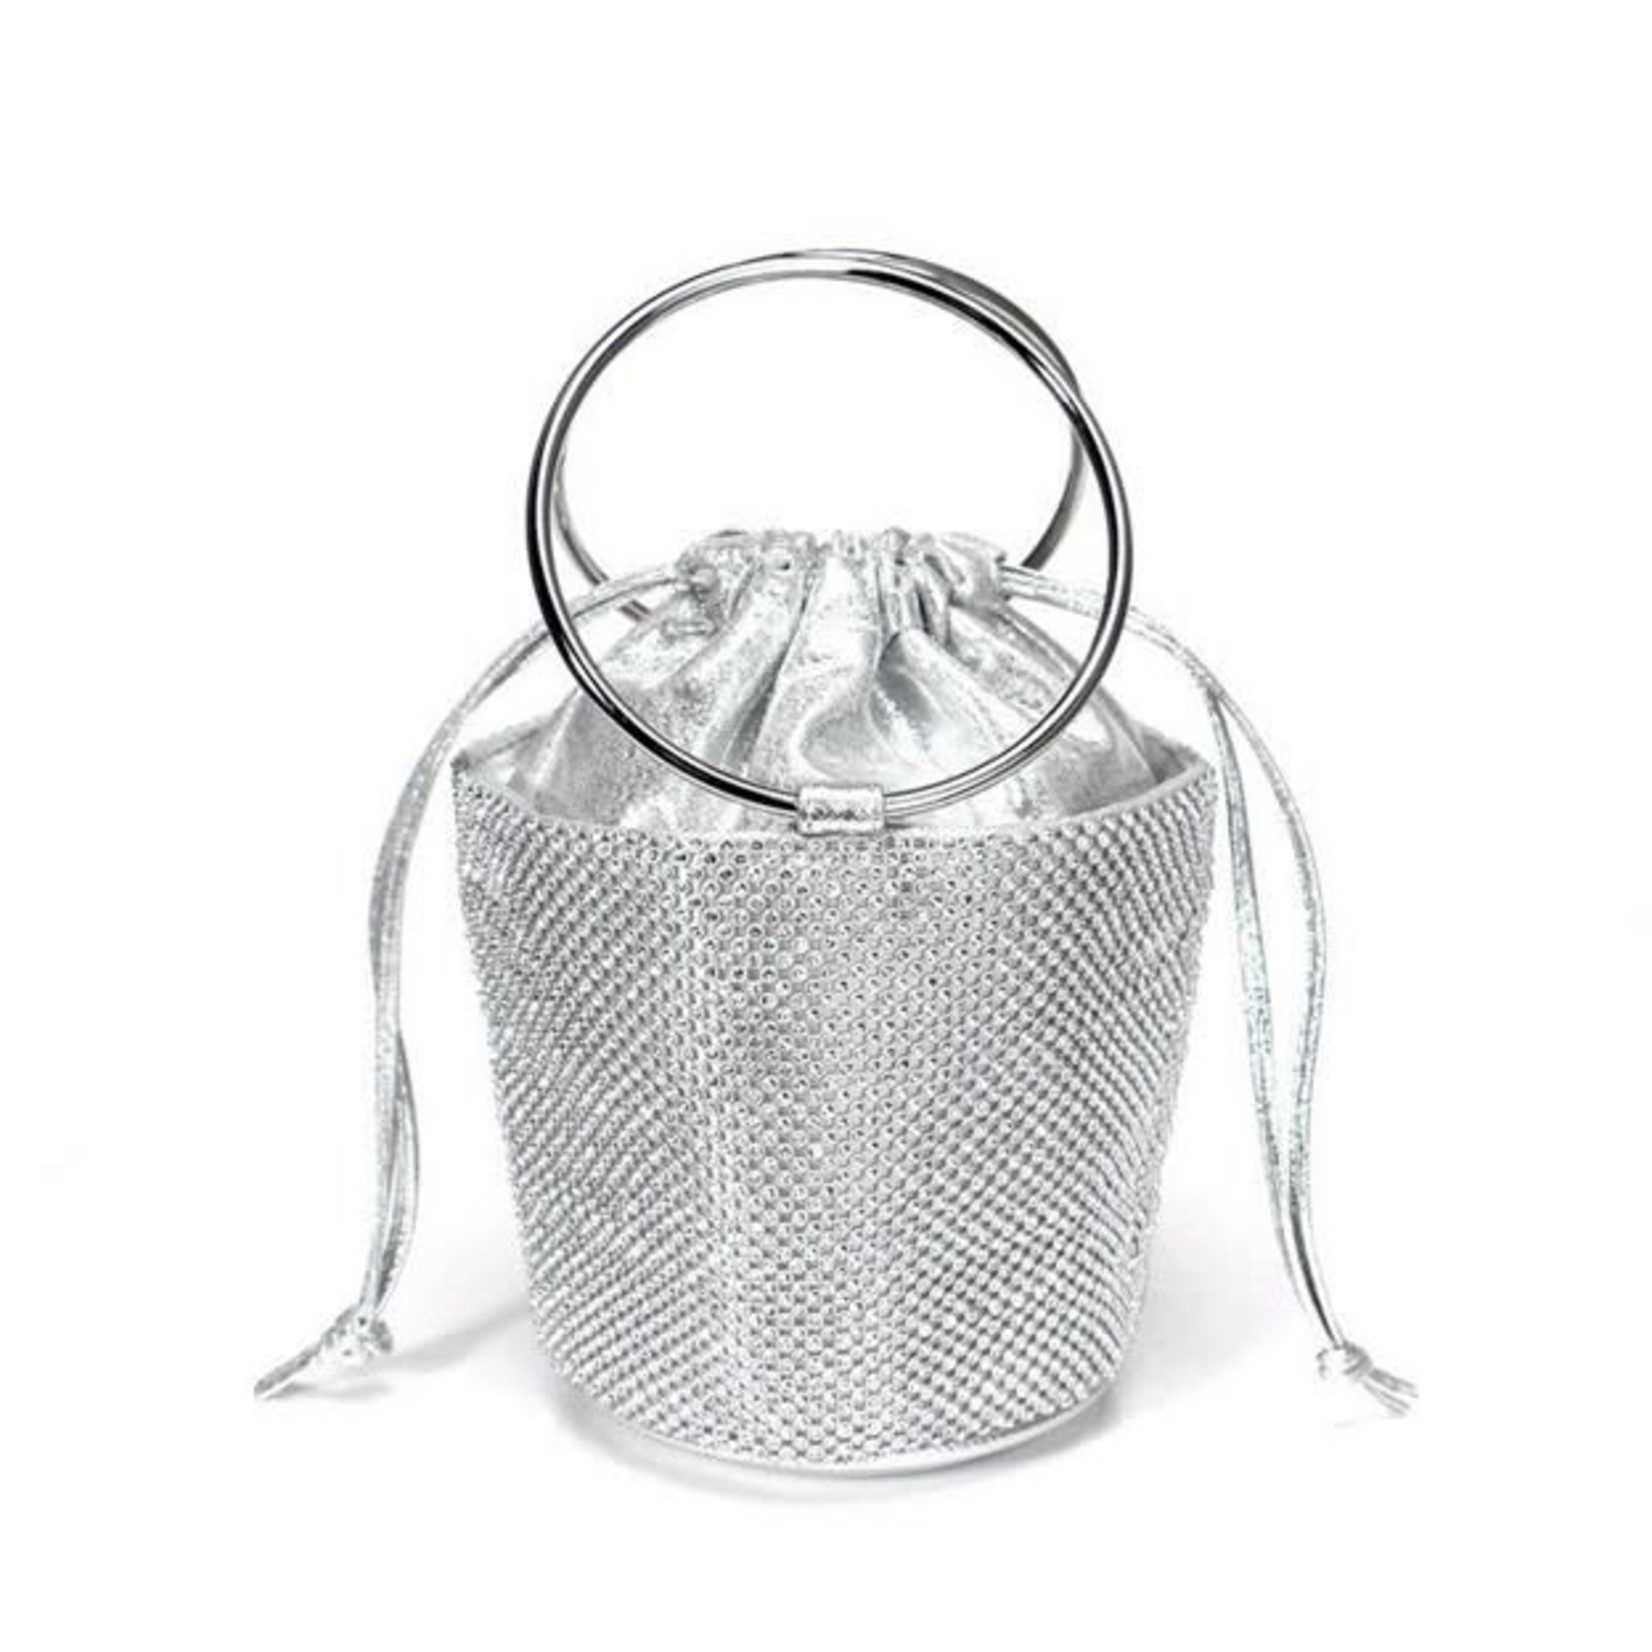 Korelo Bucket Bag in Metallic Silver